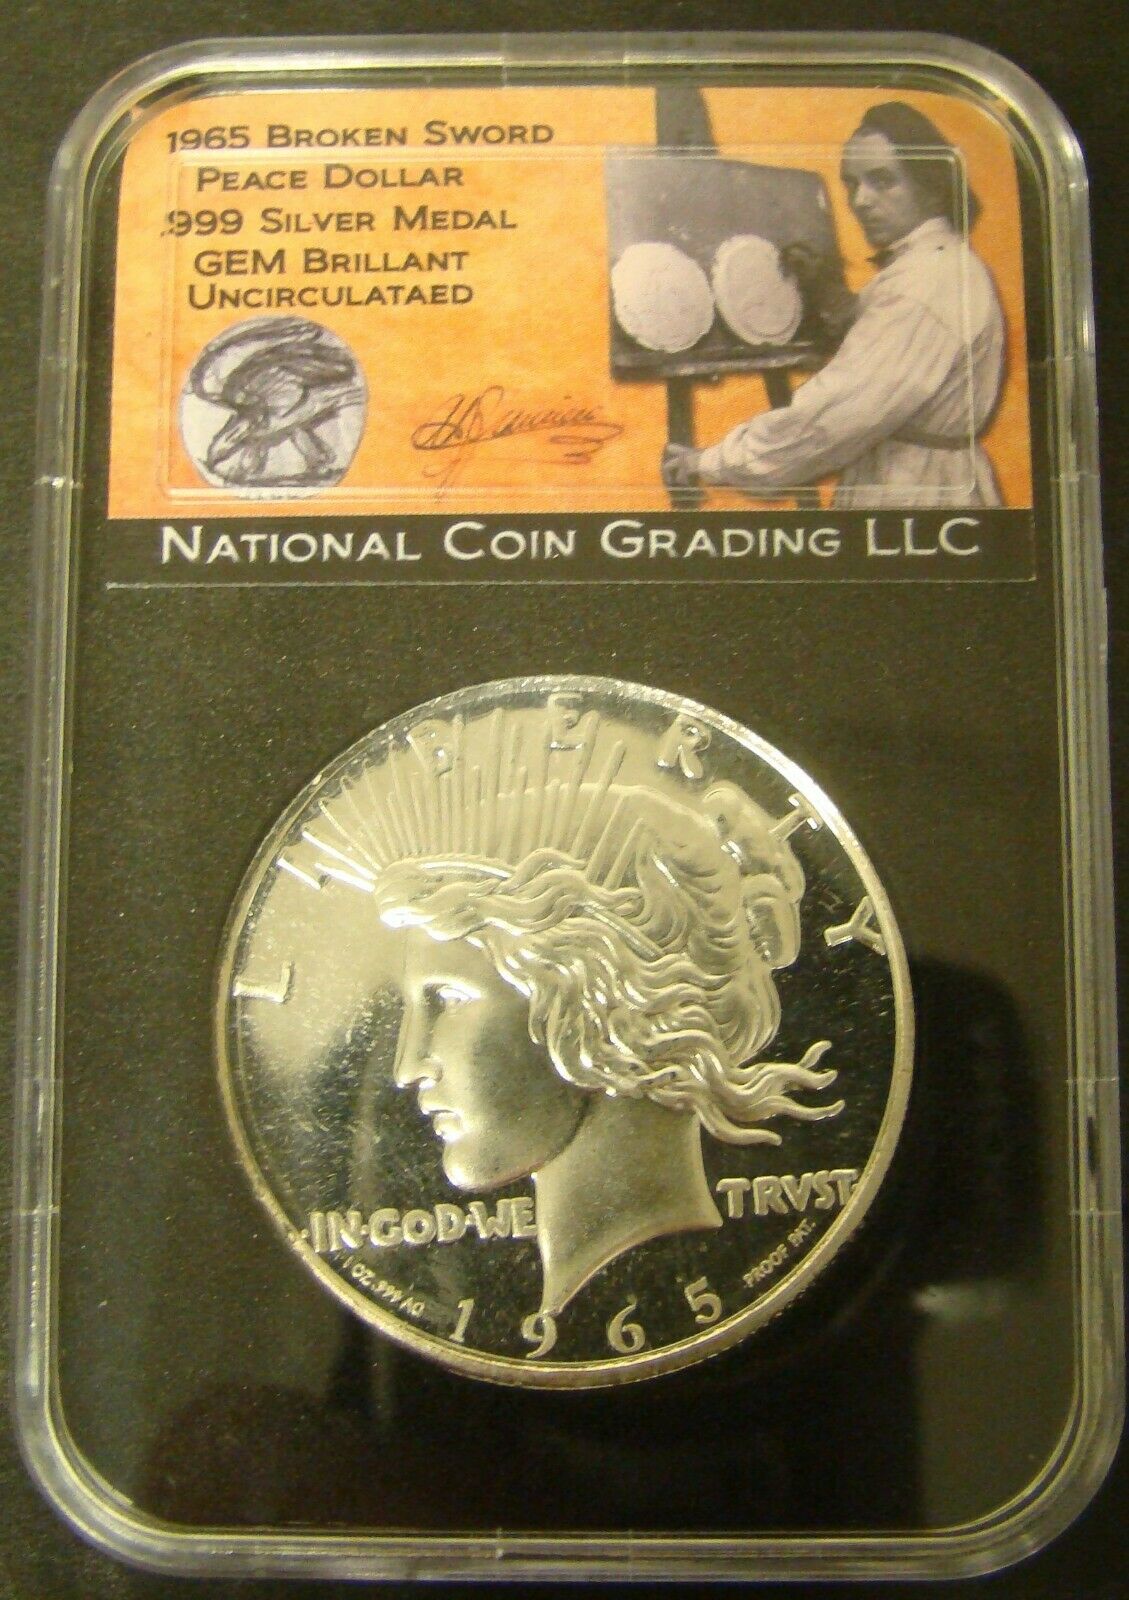 1965 Broken Sword Peace Dollar .999 Silver Medal Gem Brillant Uncirculated